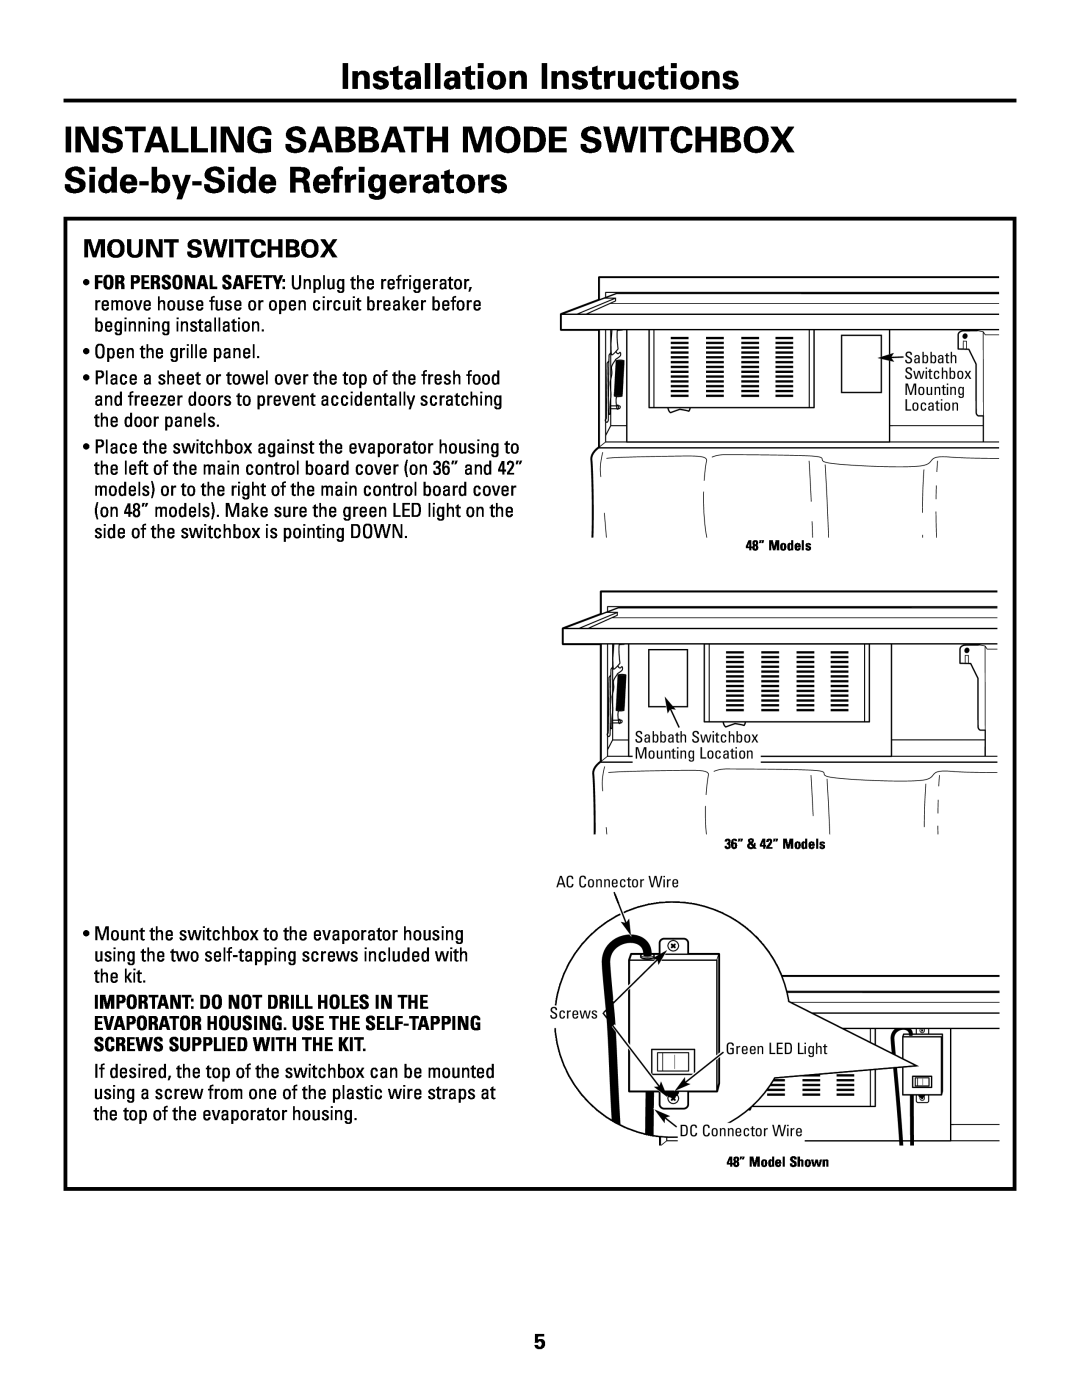 GE Monogram ZSAB1 Installation Instructions, INSTALLING SABBATH MODE SWITCHBOX Side-by-Side Refrigerators, Mount Switchbox 